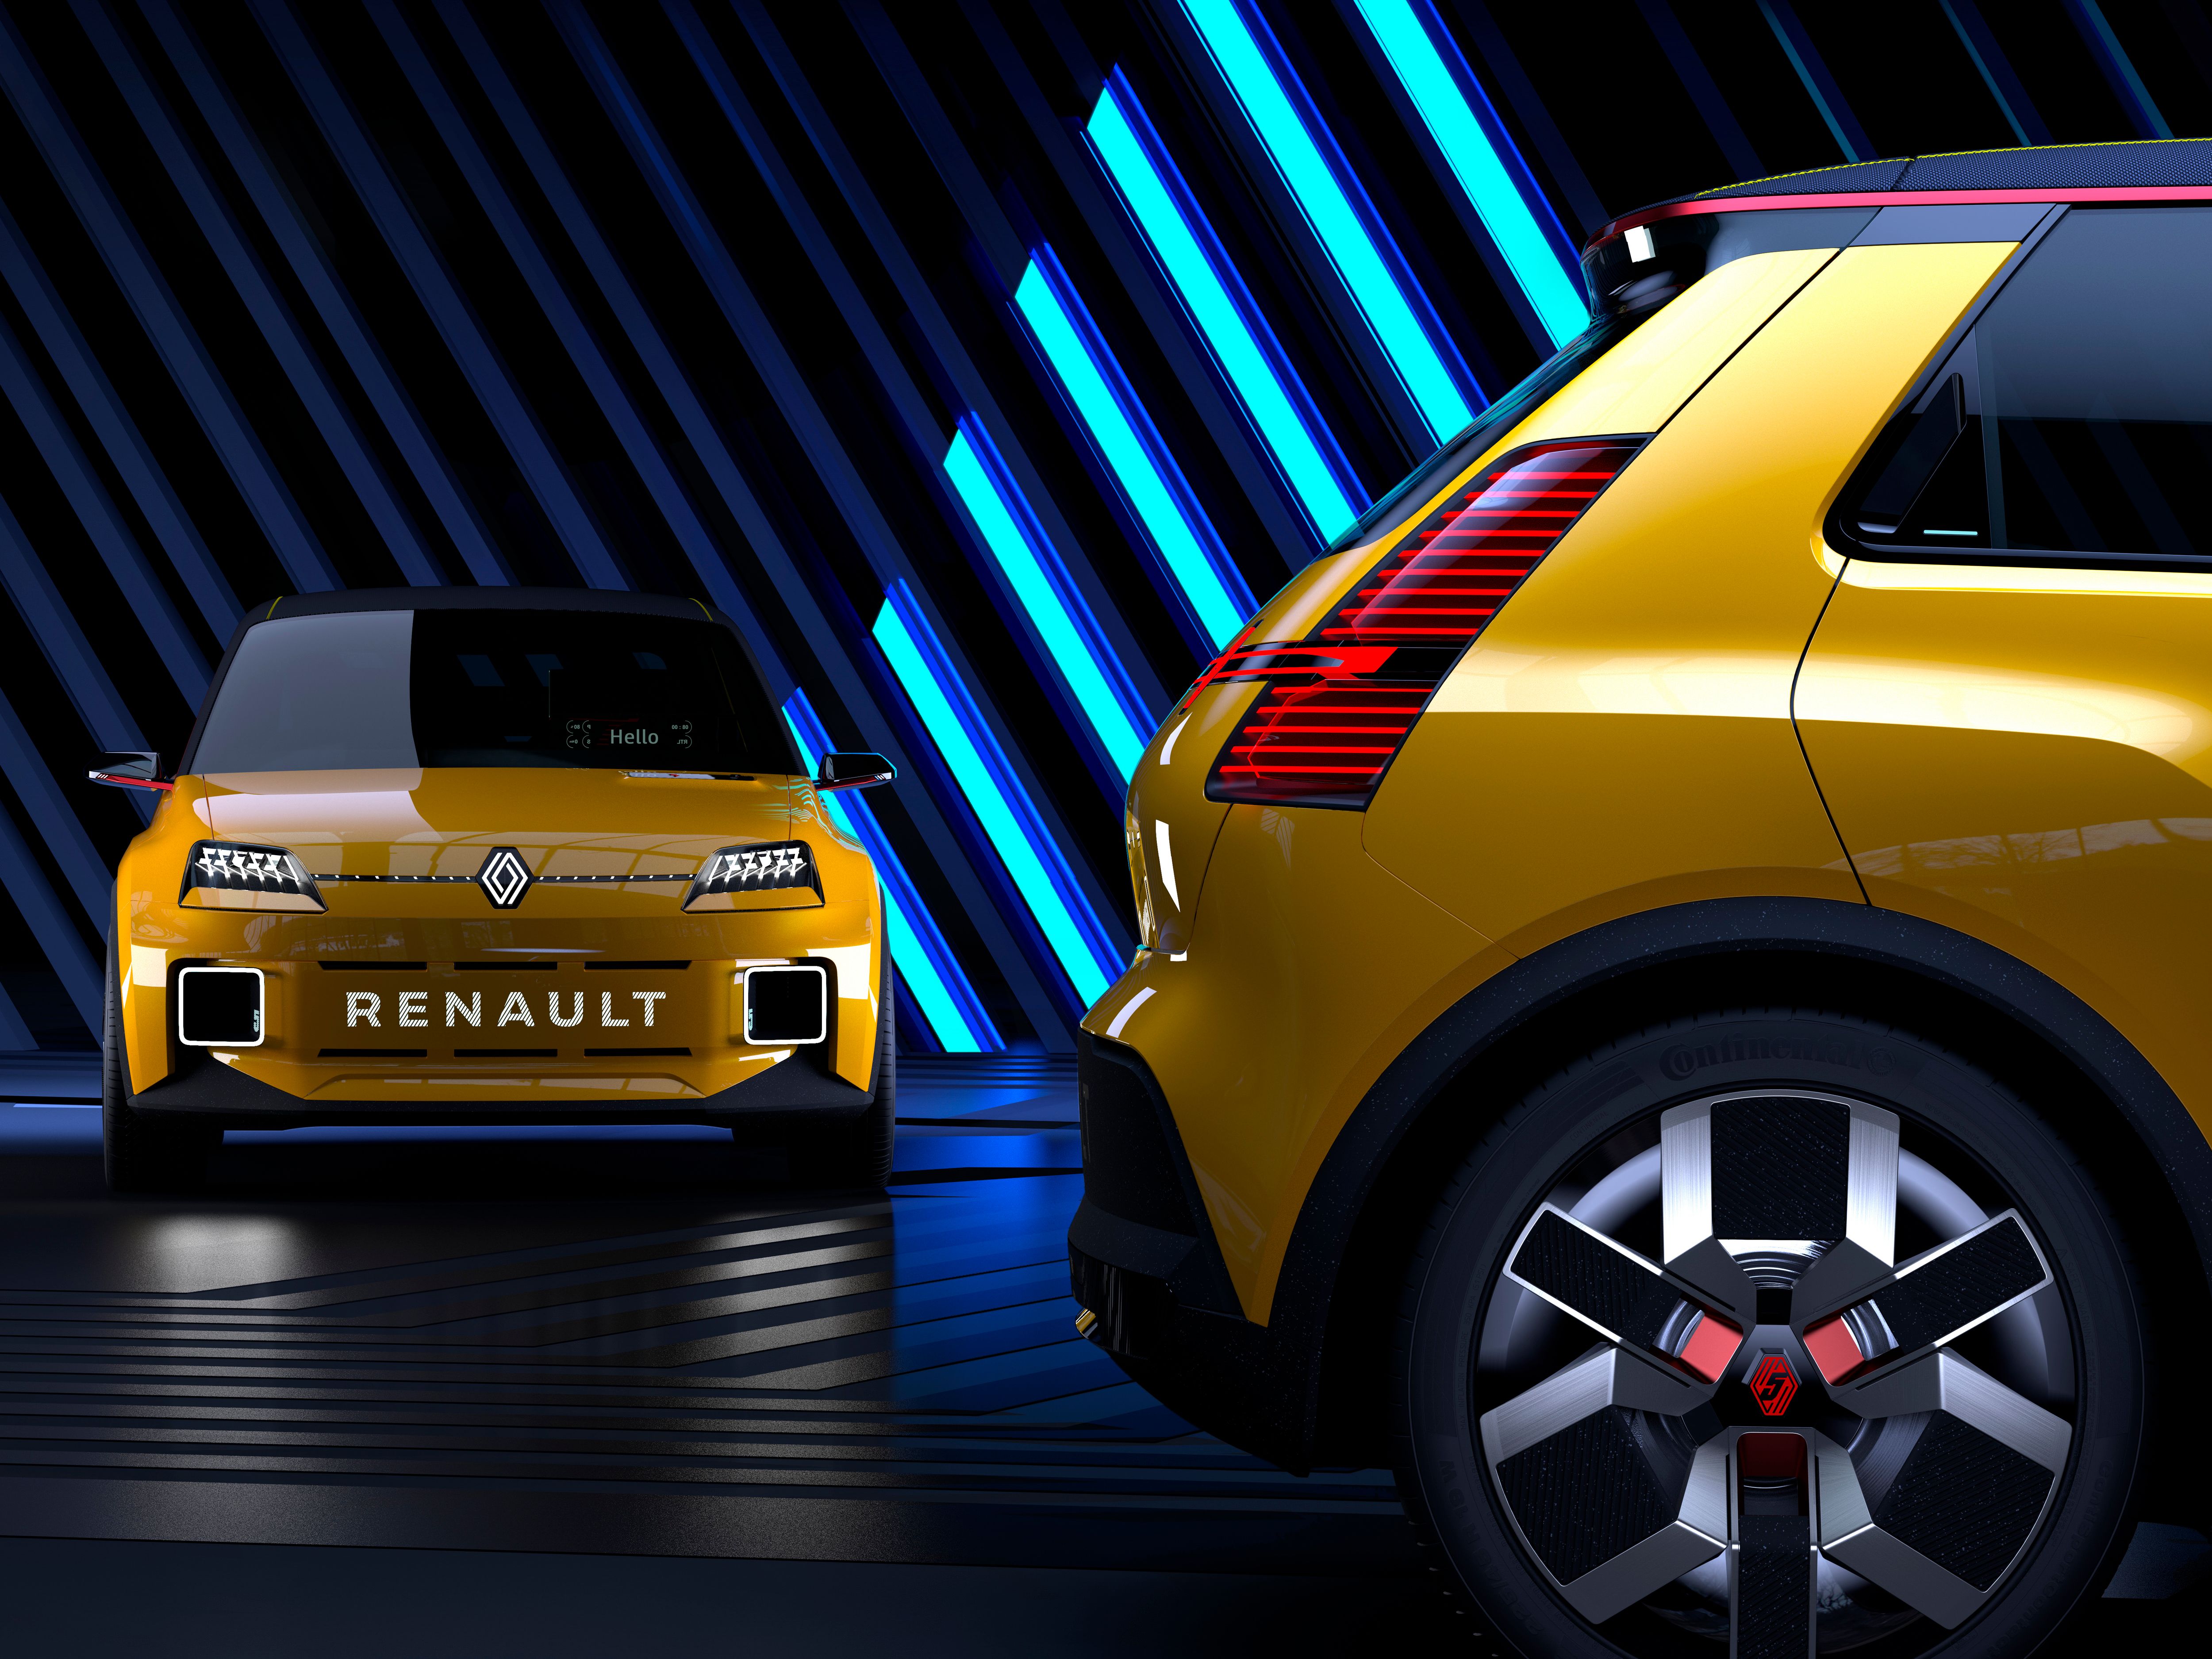 2021 Renault 5 Prototype - A Glimpse Into The Future